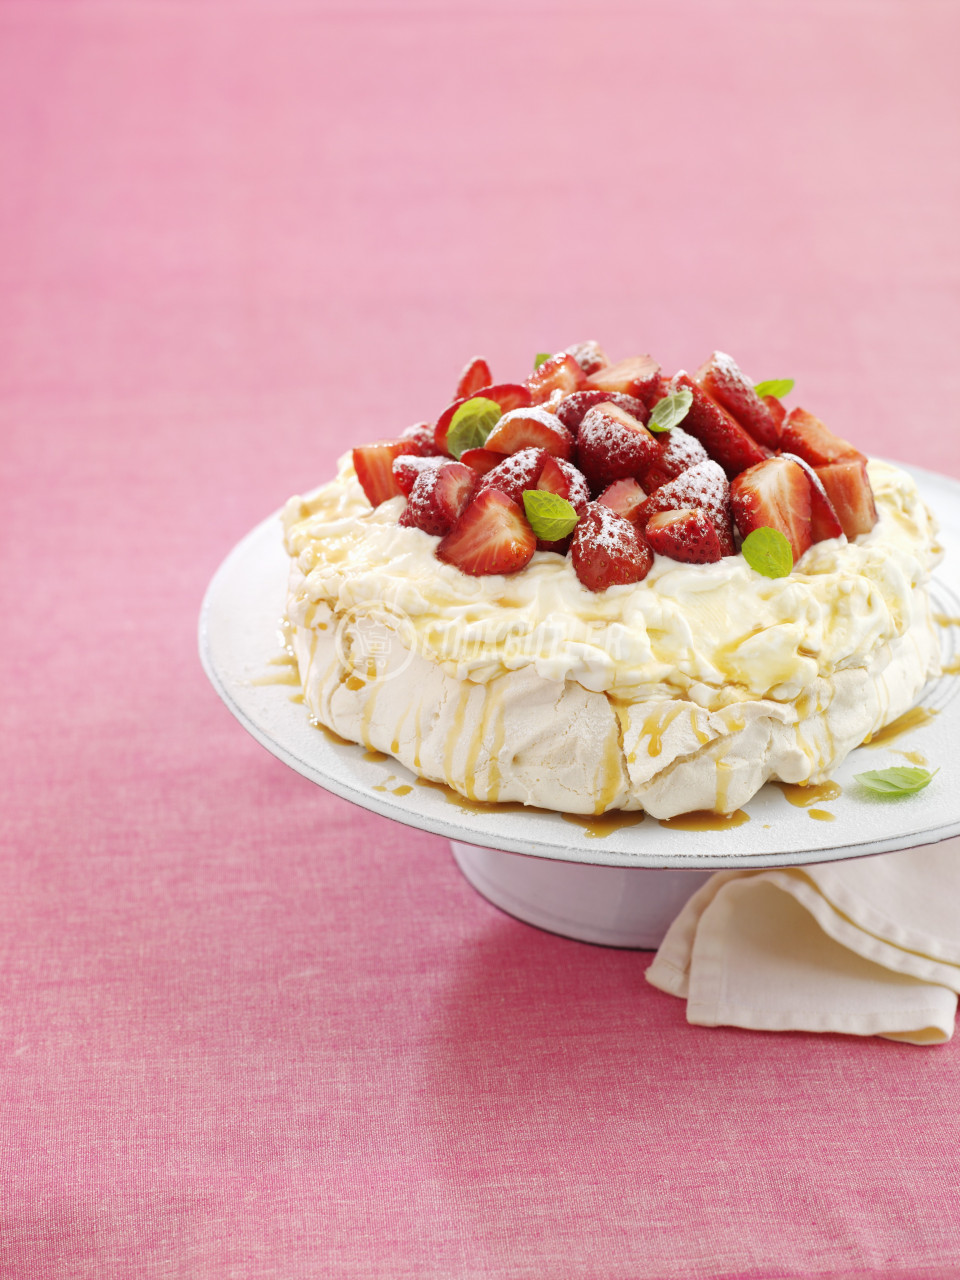 Pavlova (Australian meringue dessert) with strawberries | preview